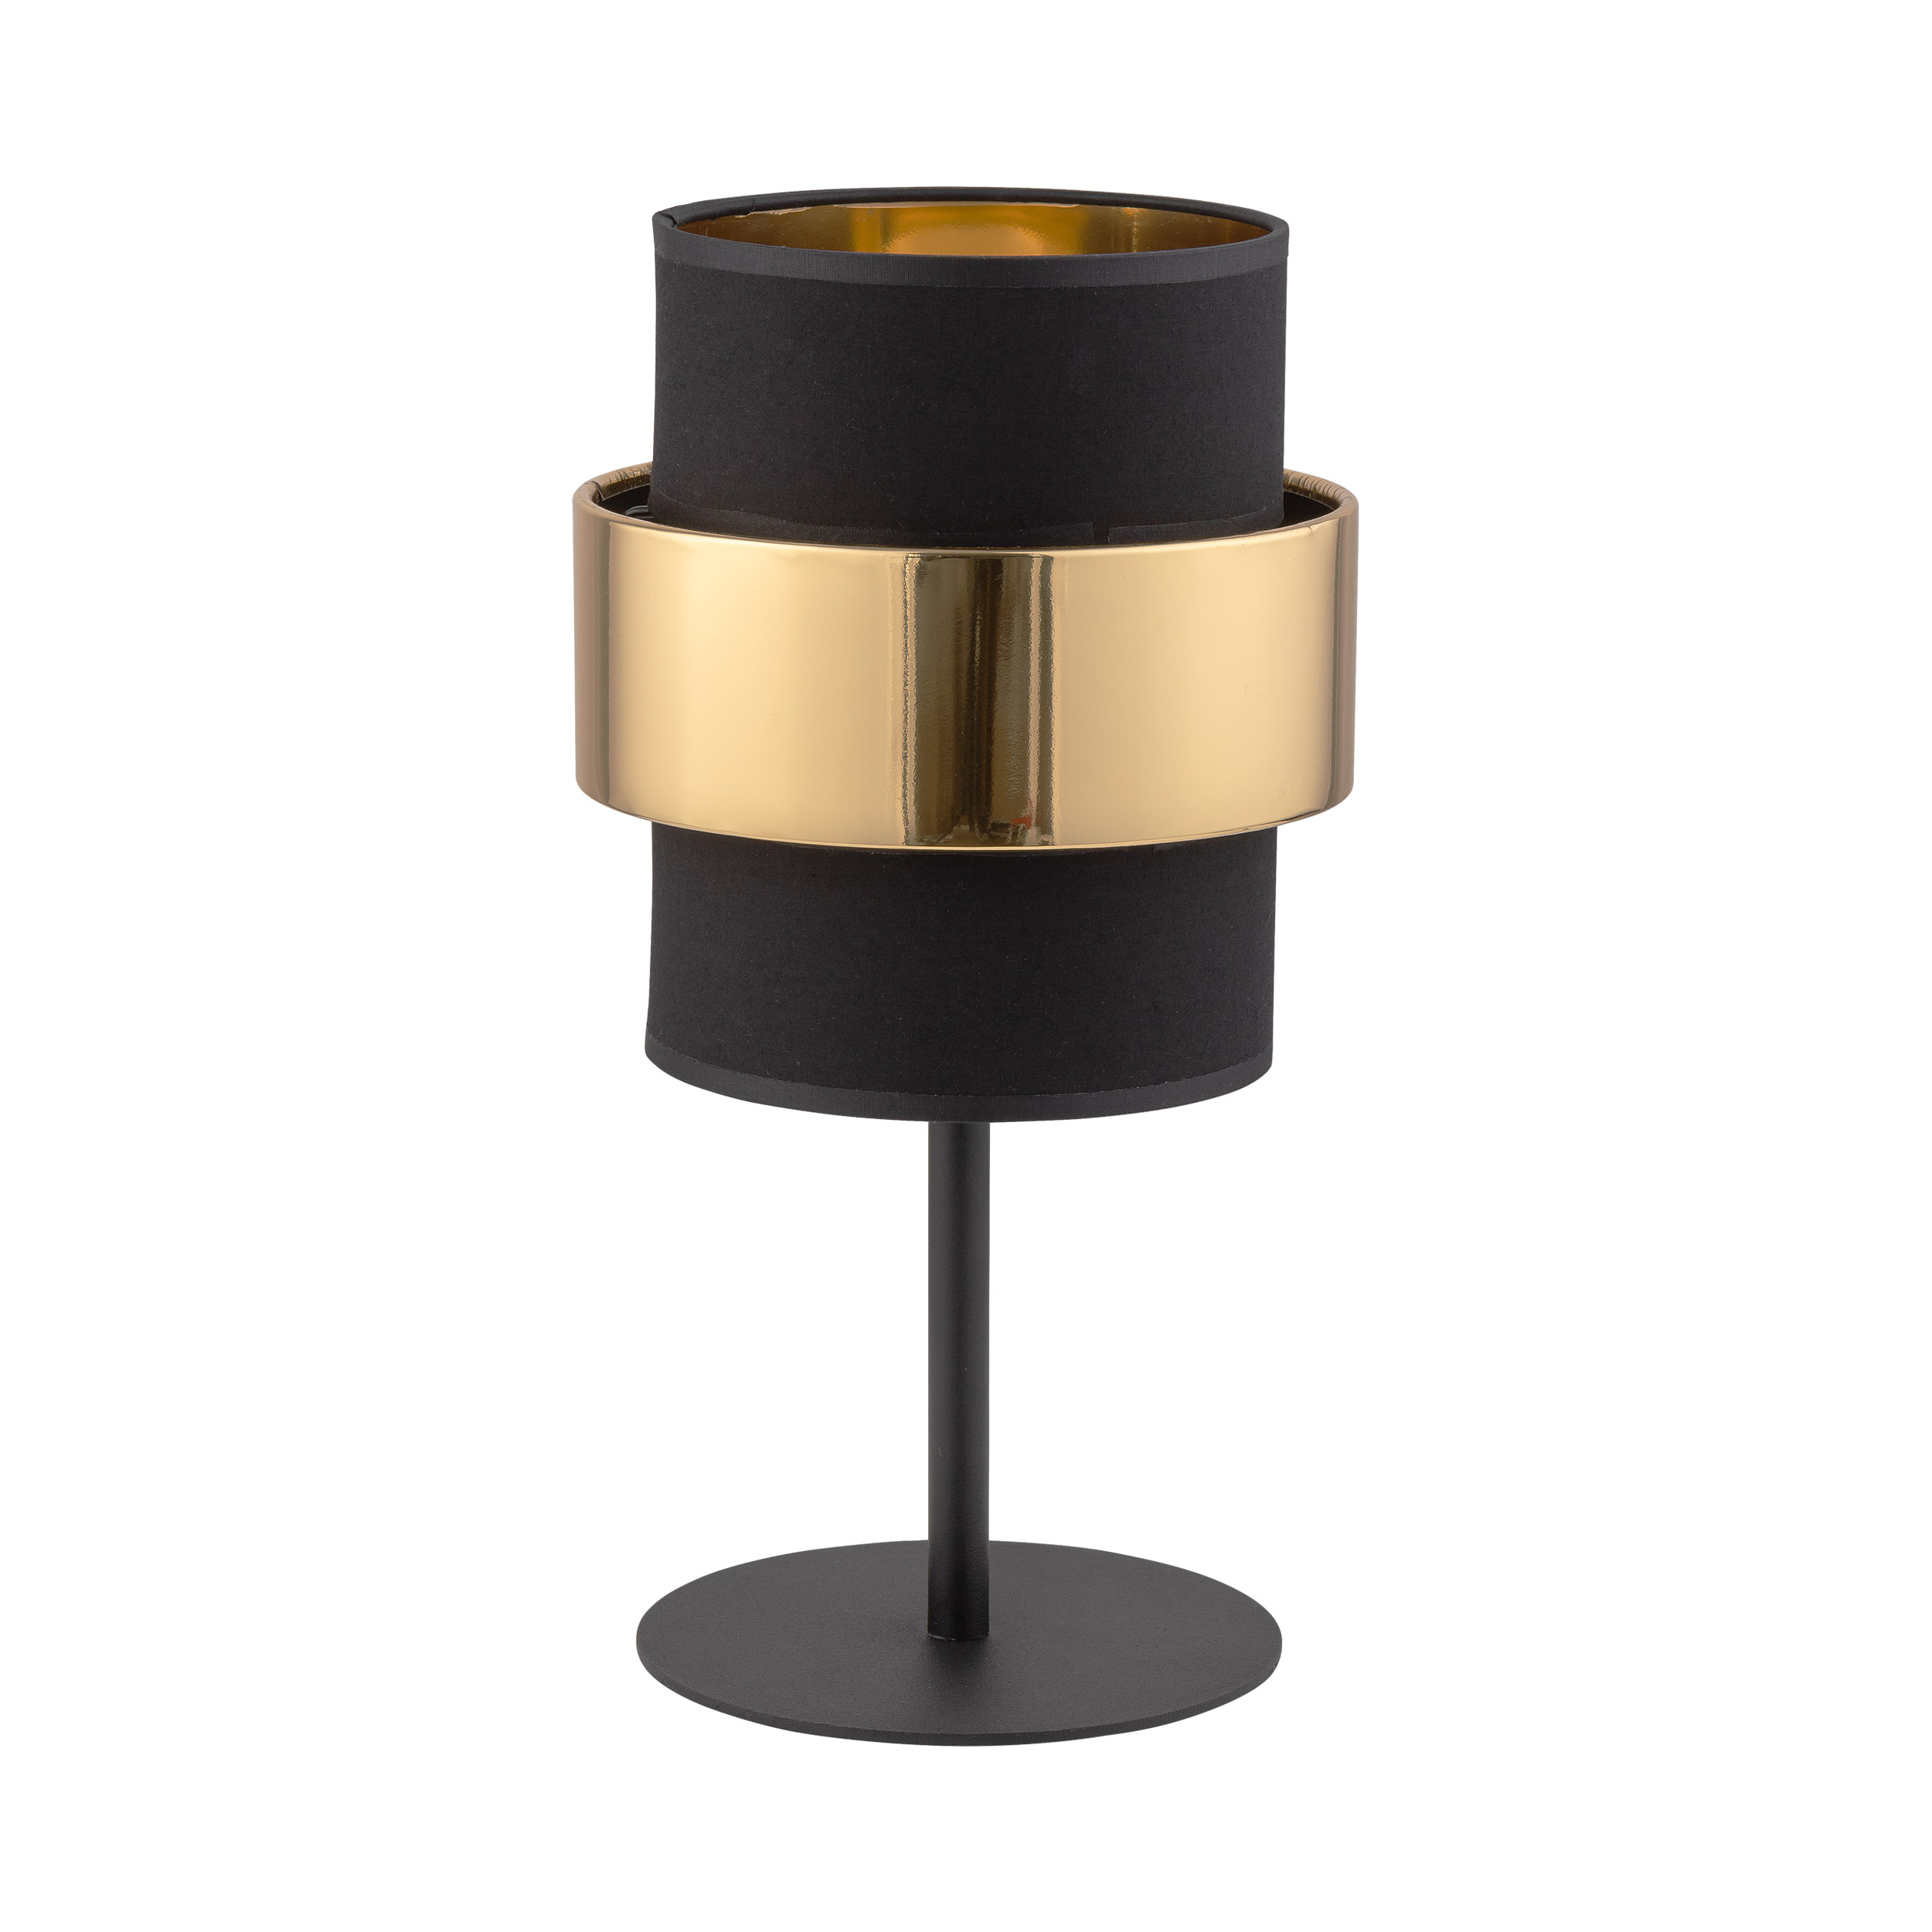 TK Calisto bordlampe, m. 3 skærme - sort stof og guld stål